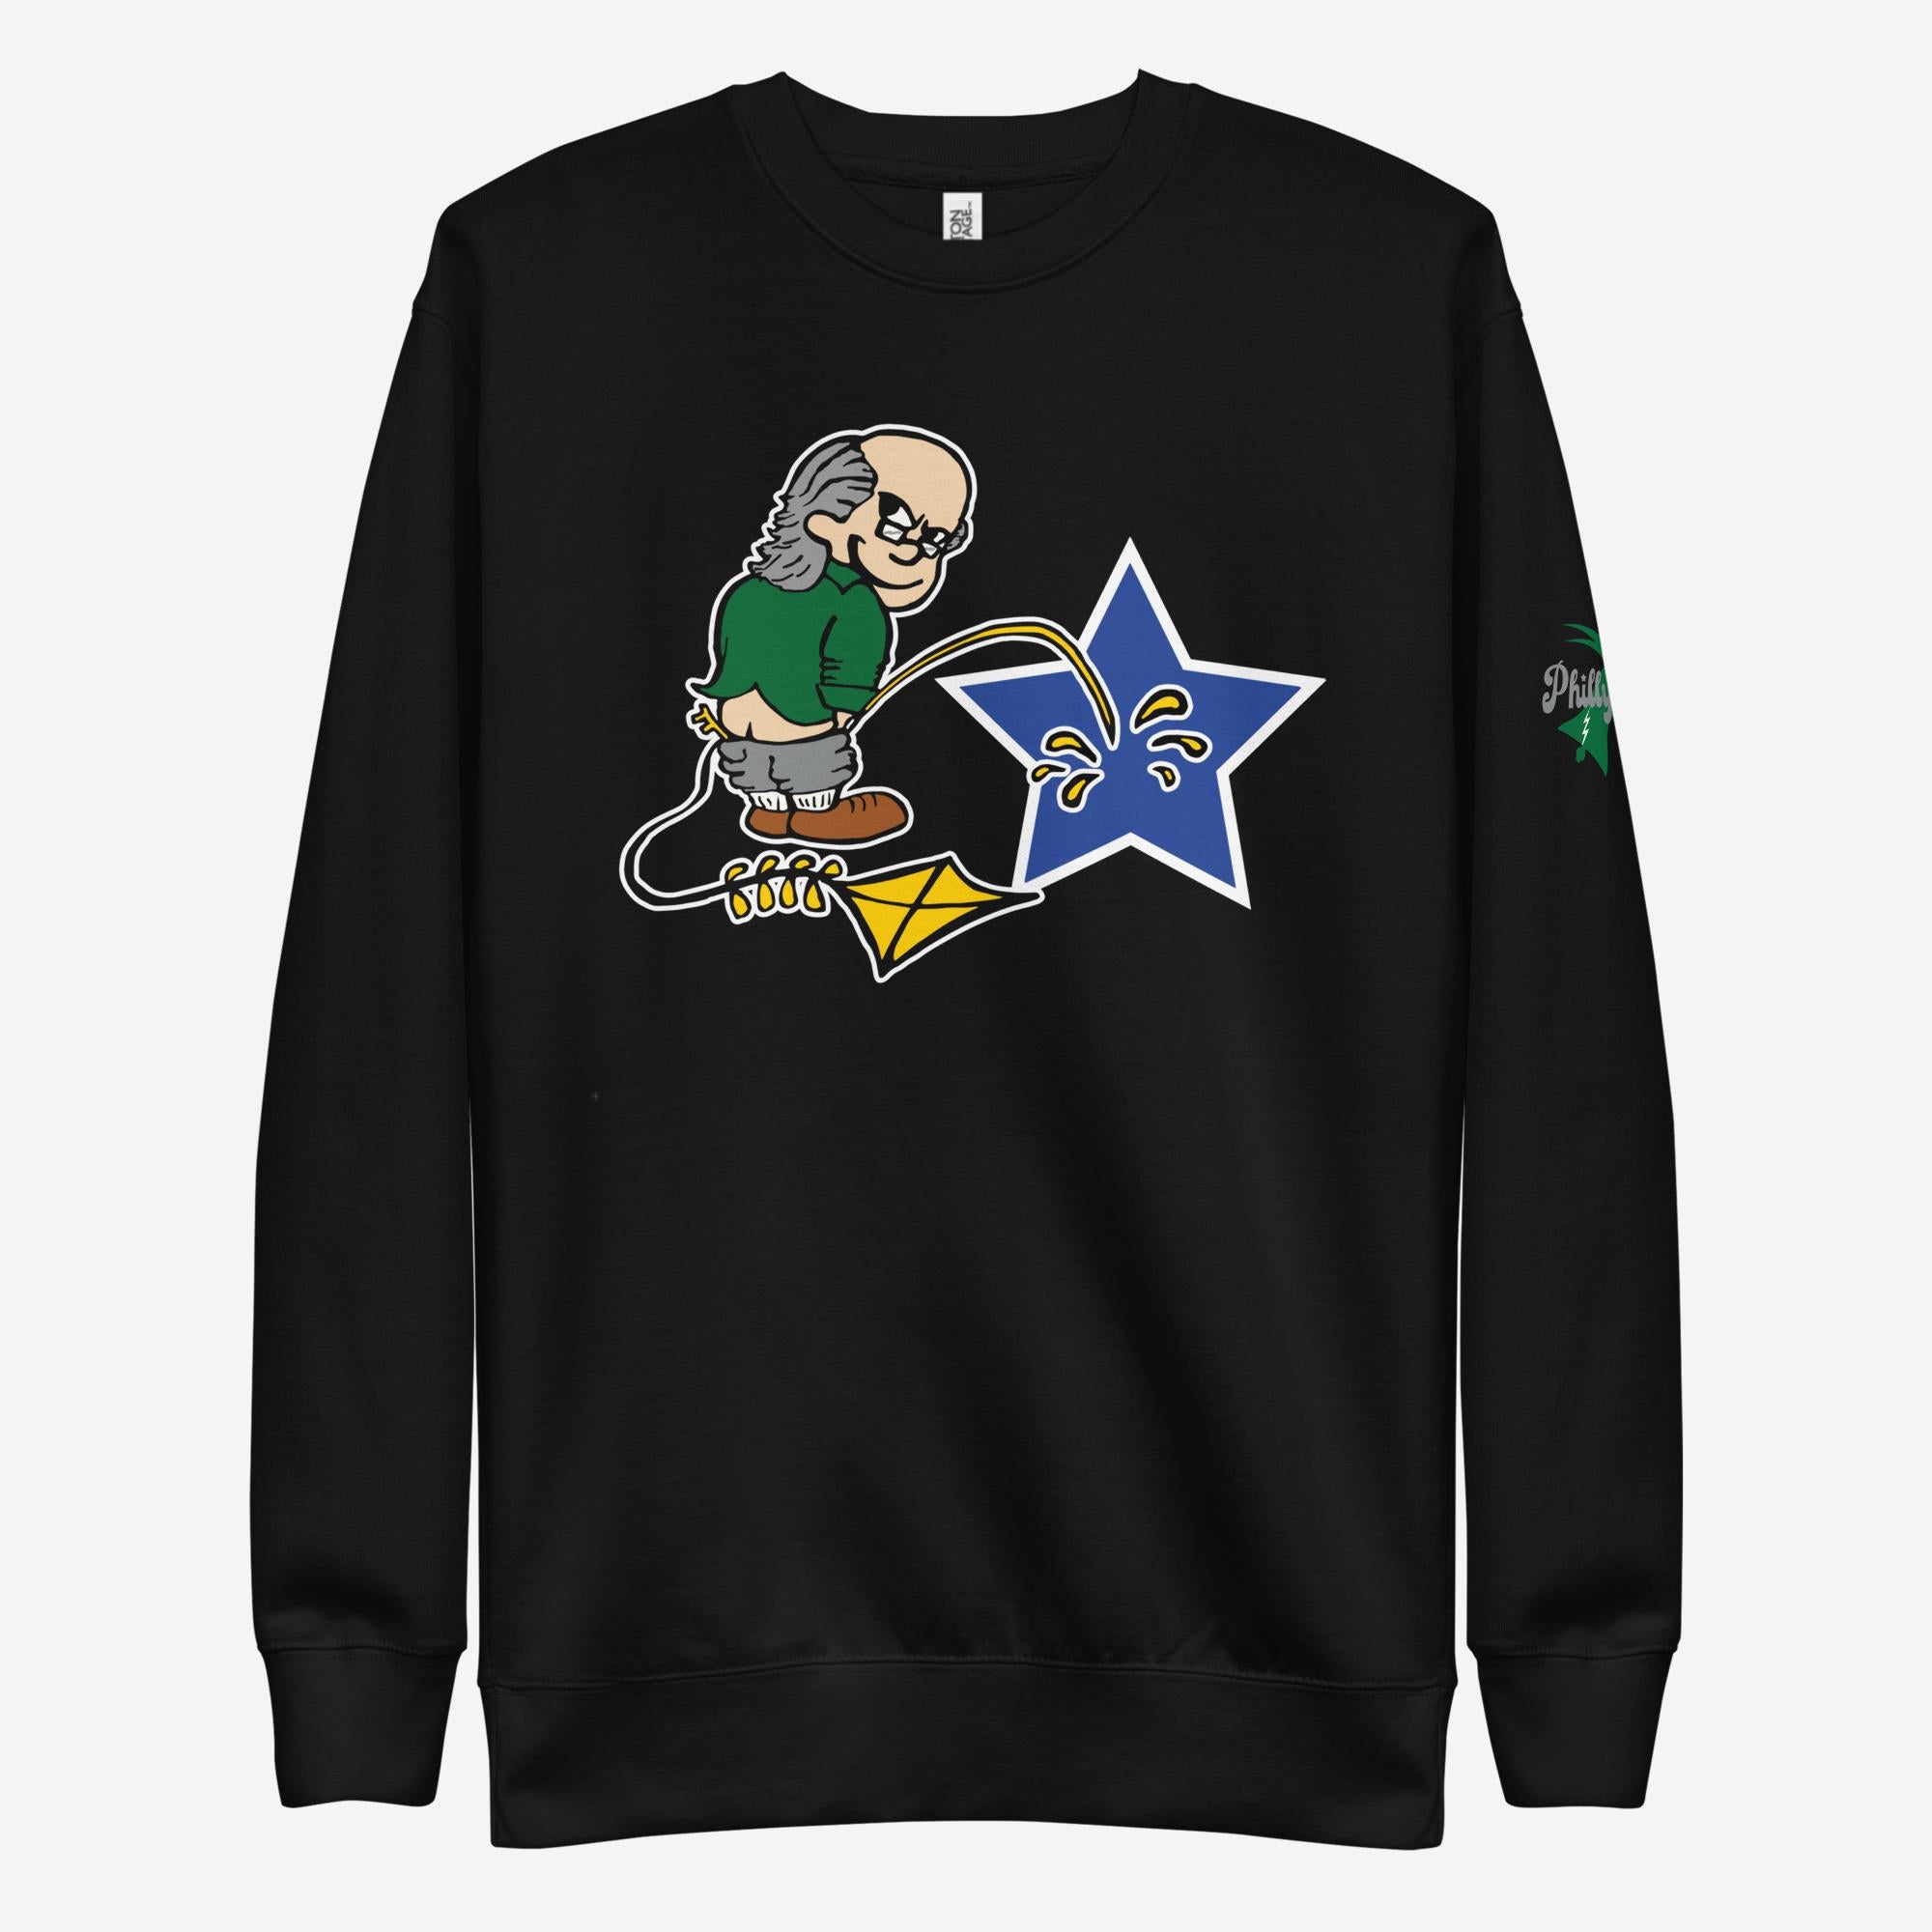 "Ben Franklin Whizzing on the Cowboy Star" Sweatshirt